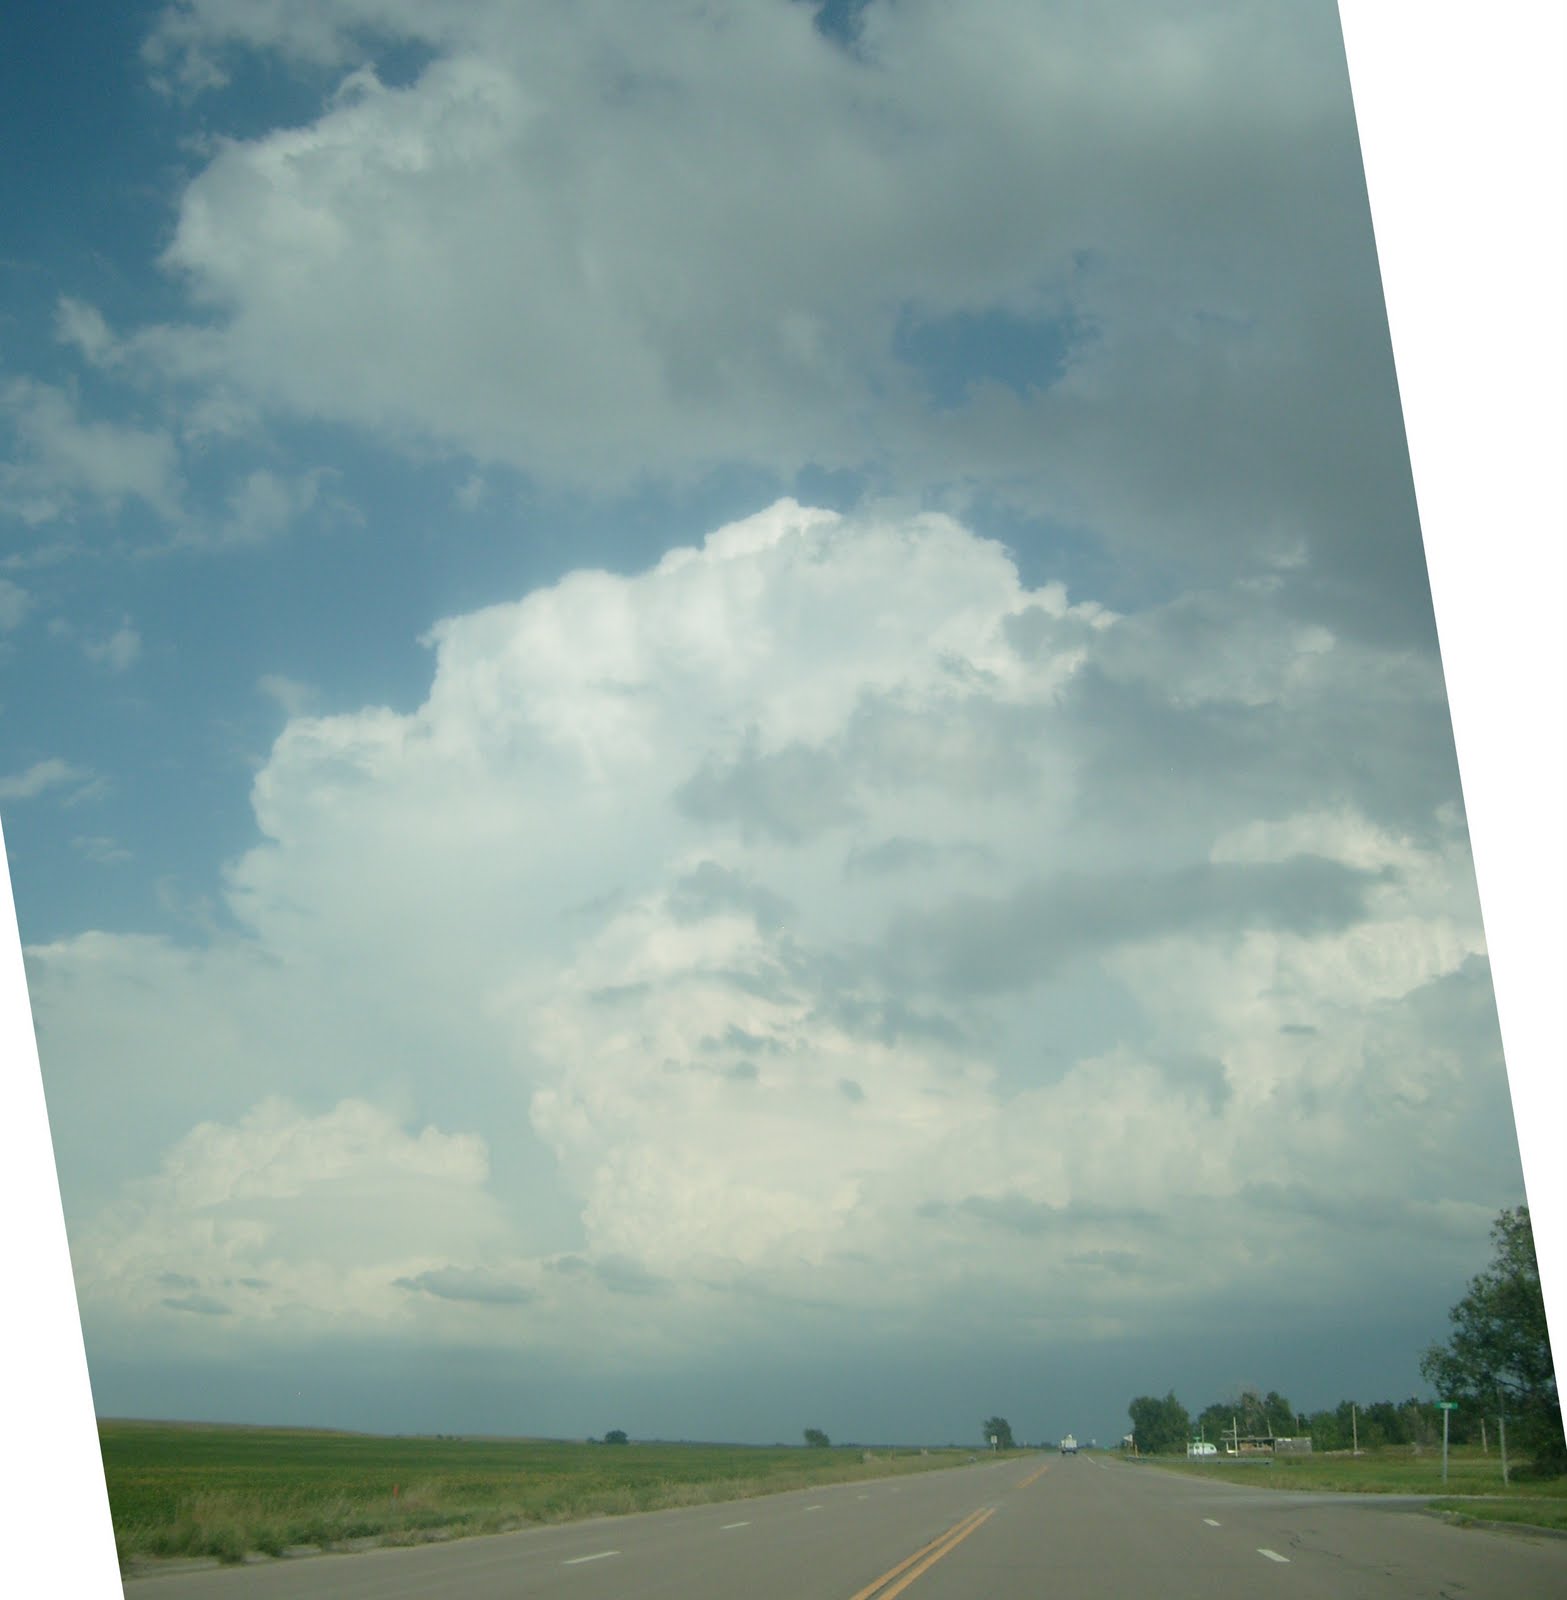 [Portis+Storm+as+seen+from+Woodston+24+Aug+2009.jpg]